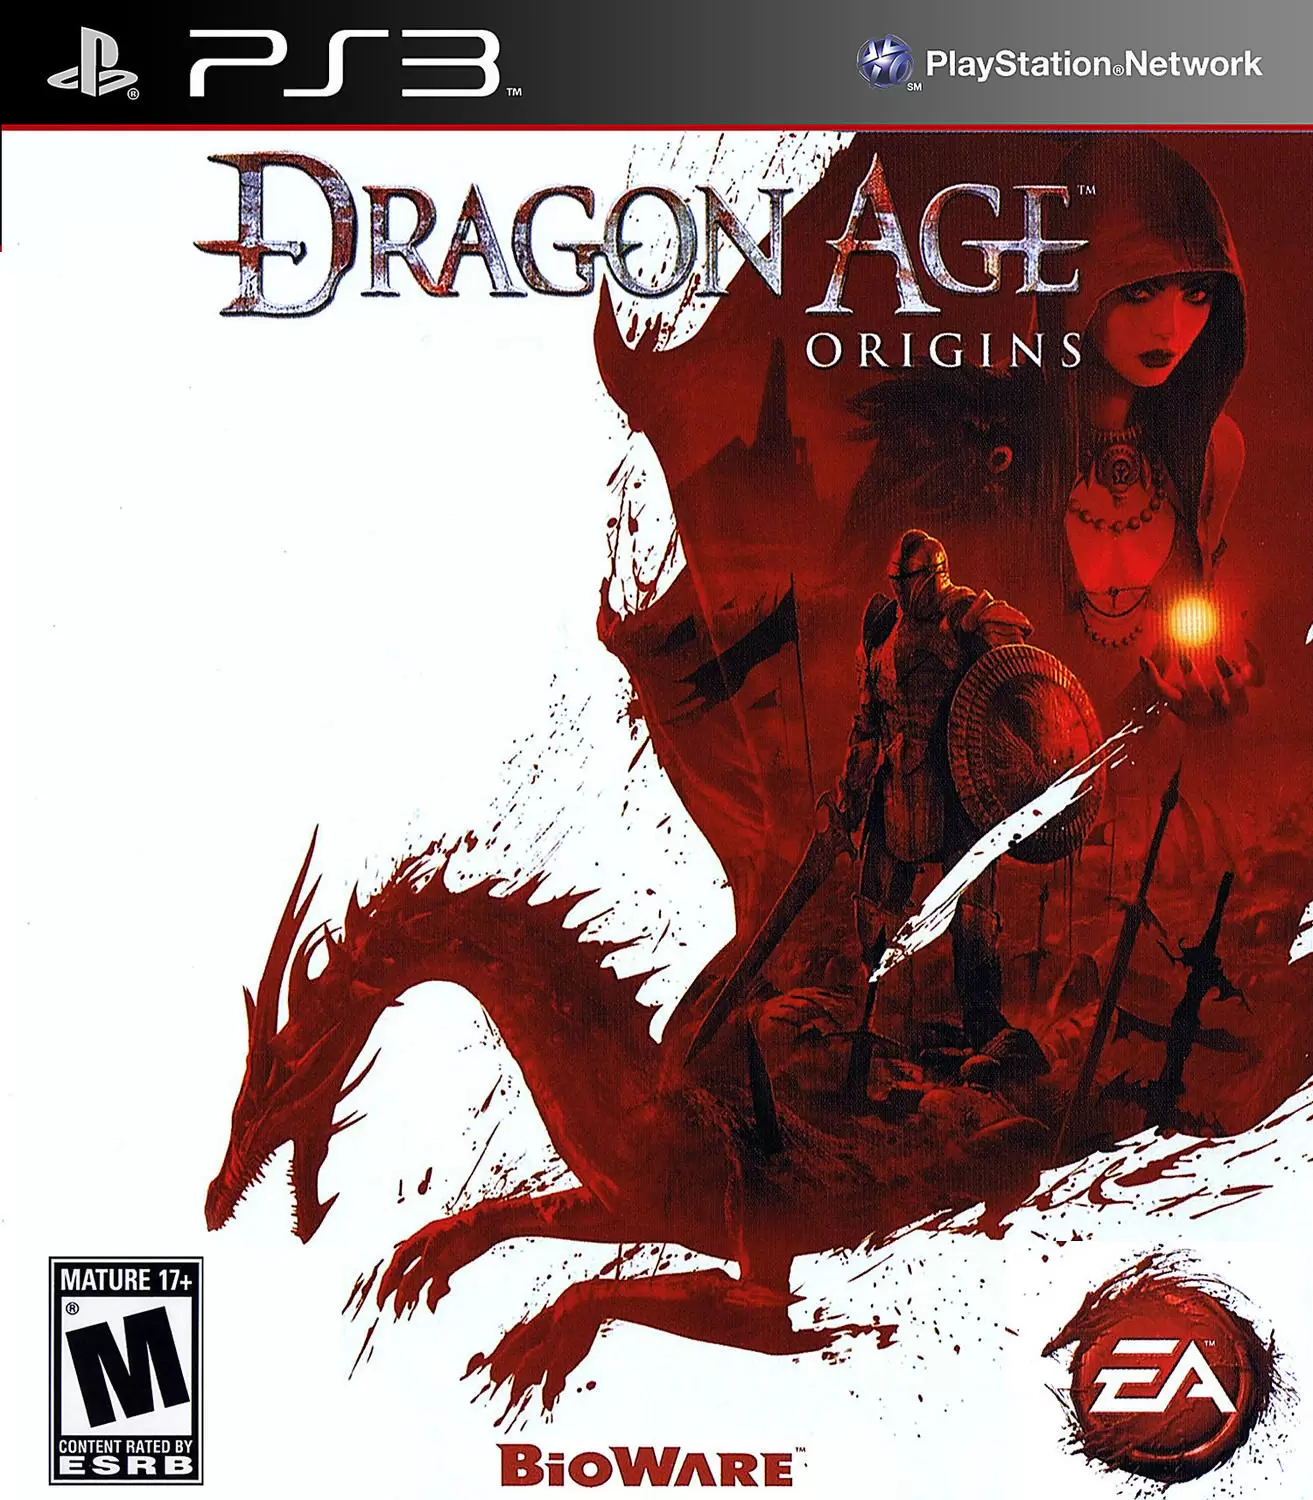 PS3 Games - Dragon Age: Origins